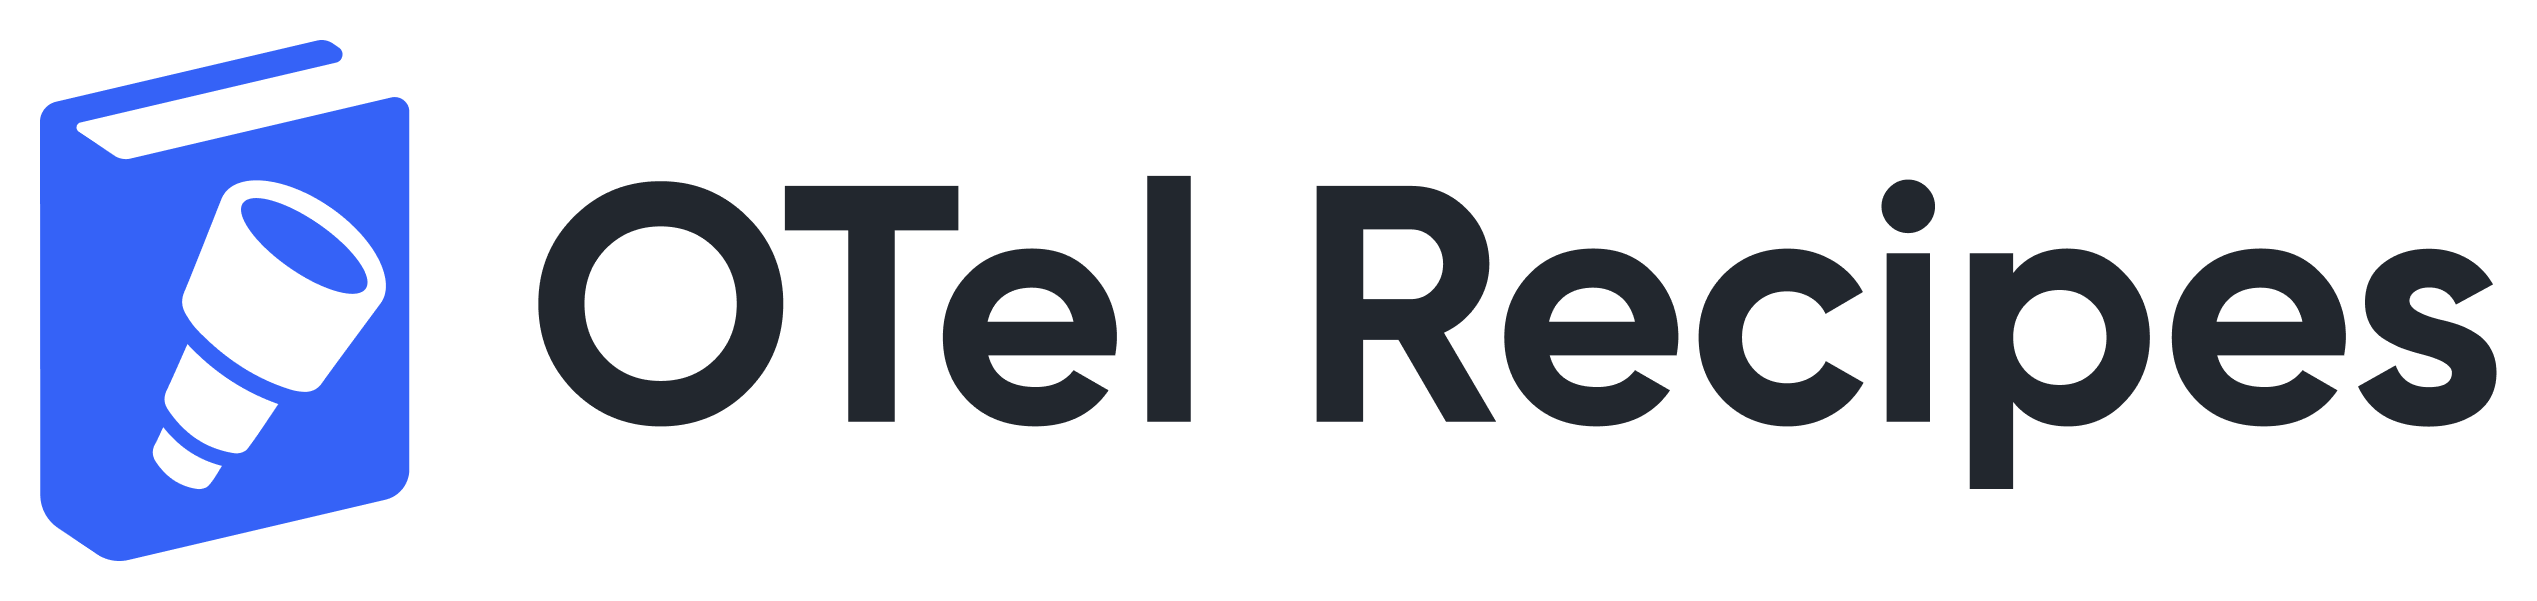 OTel recipes Logo